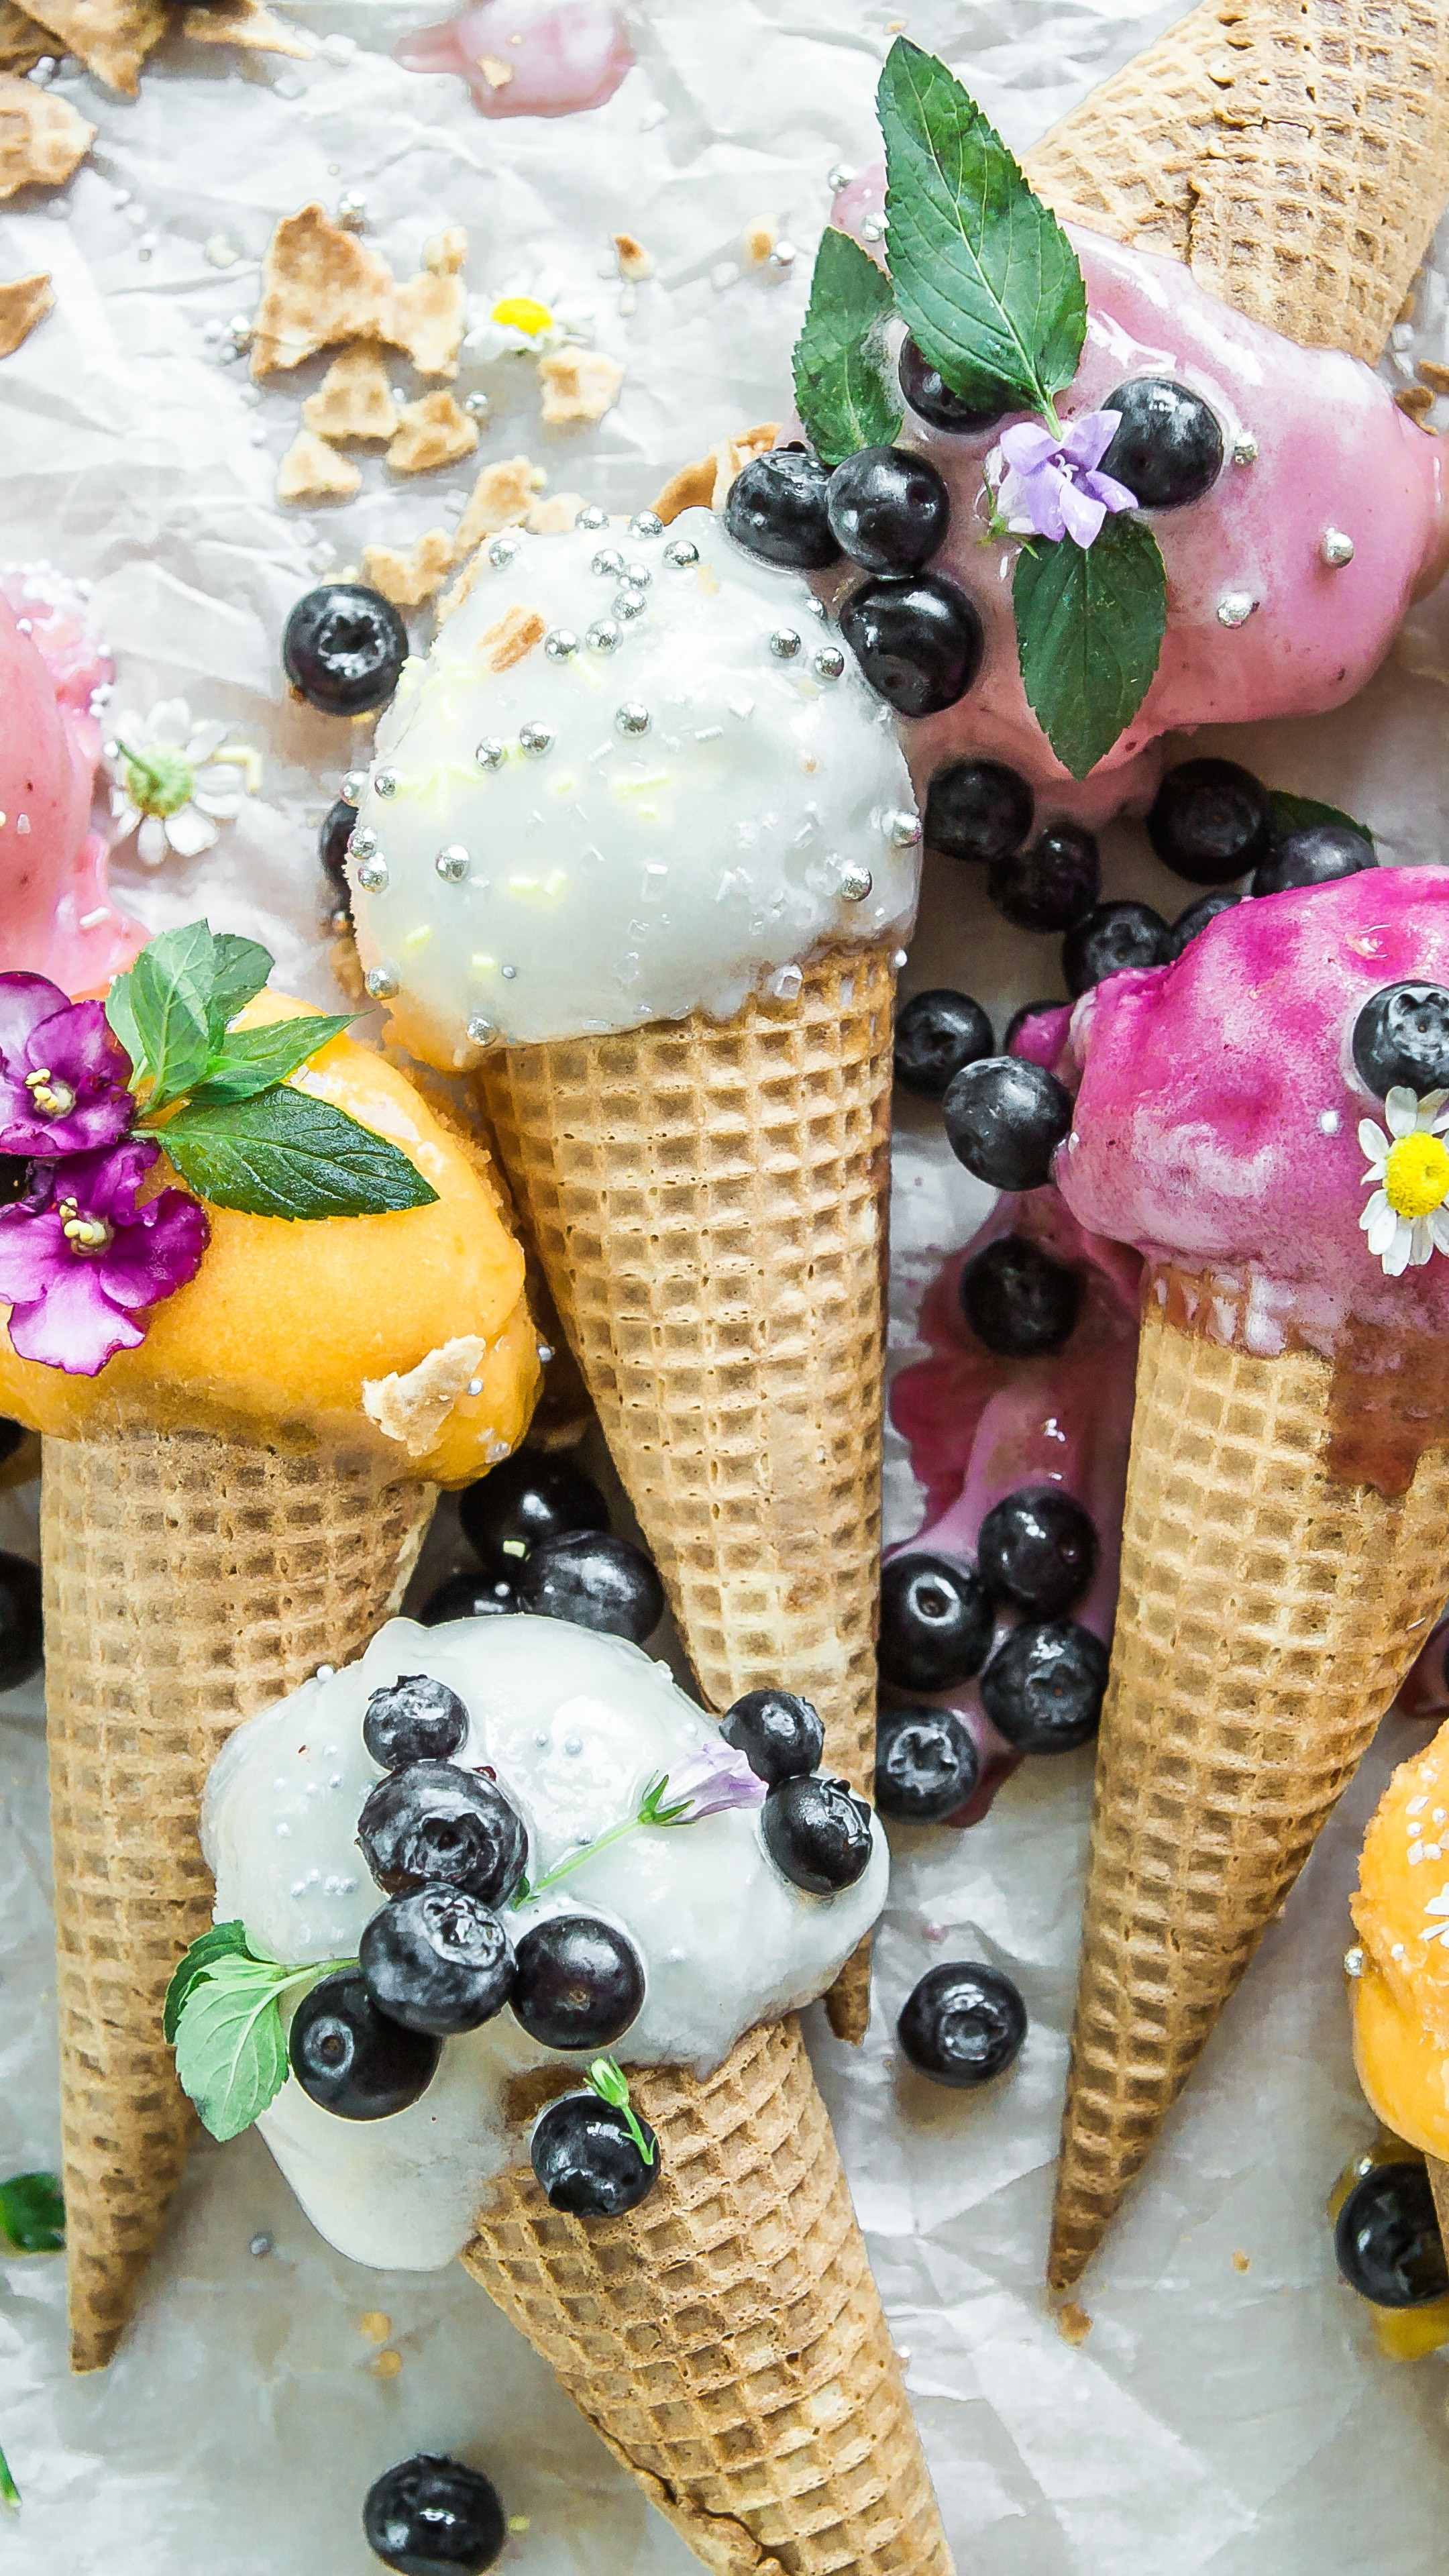 78,198 Ice Cream Wallpapers Images, Stock Photos & Vectors | Shutterstock